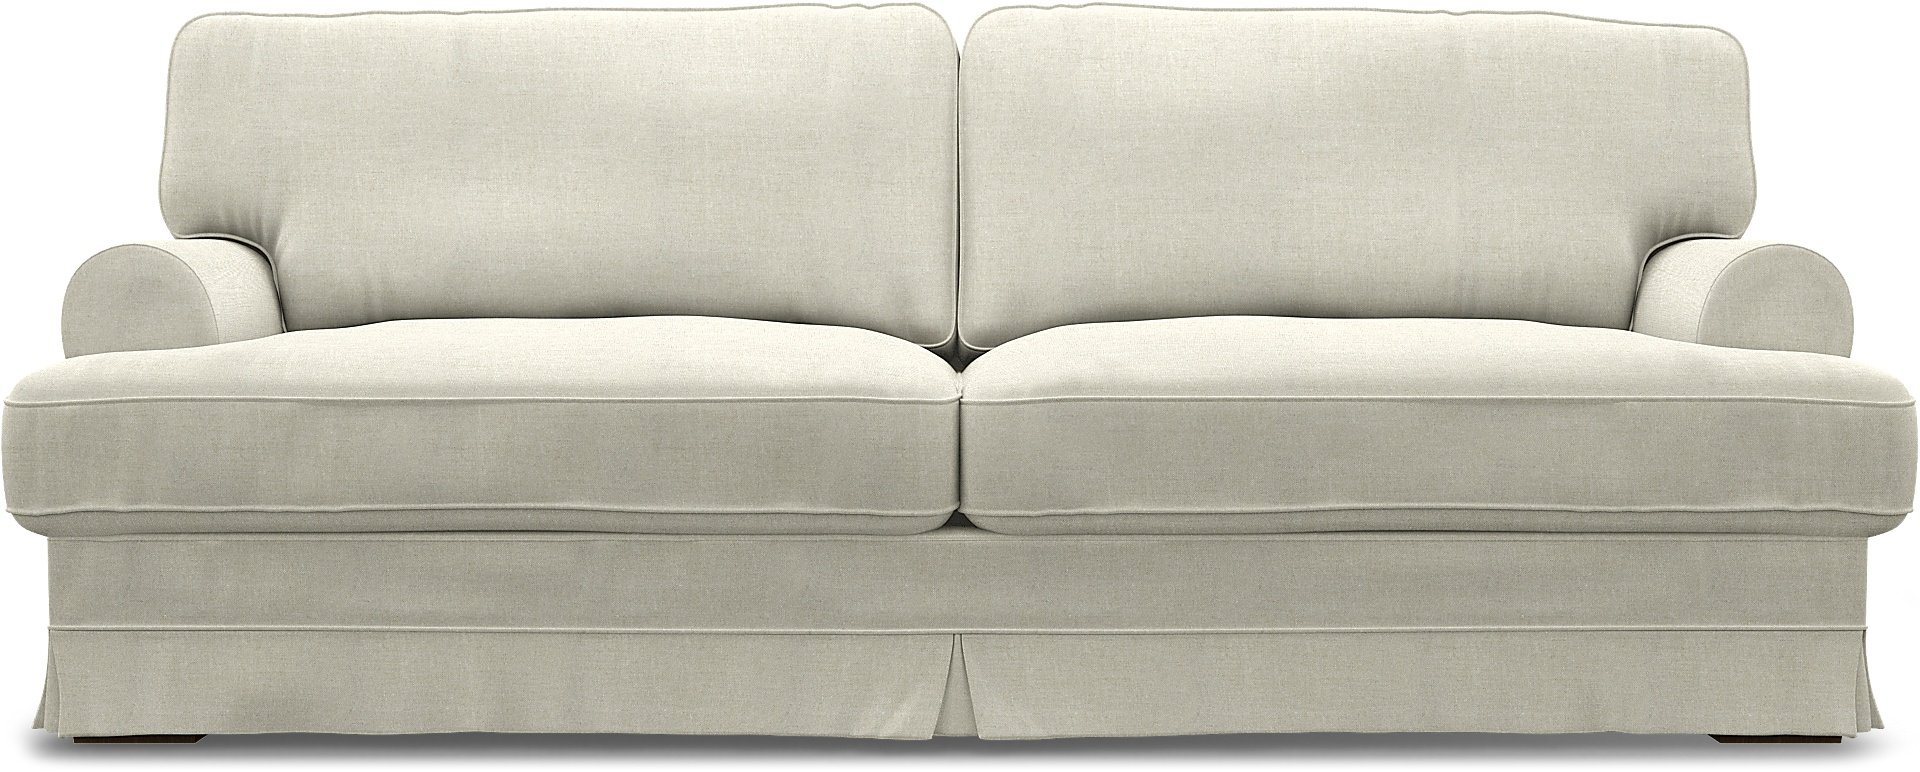 IKEA - Ekeskog 3 Seater Sofa Cover, Natural, Linen - Bemz